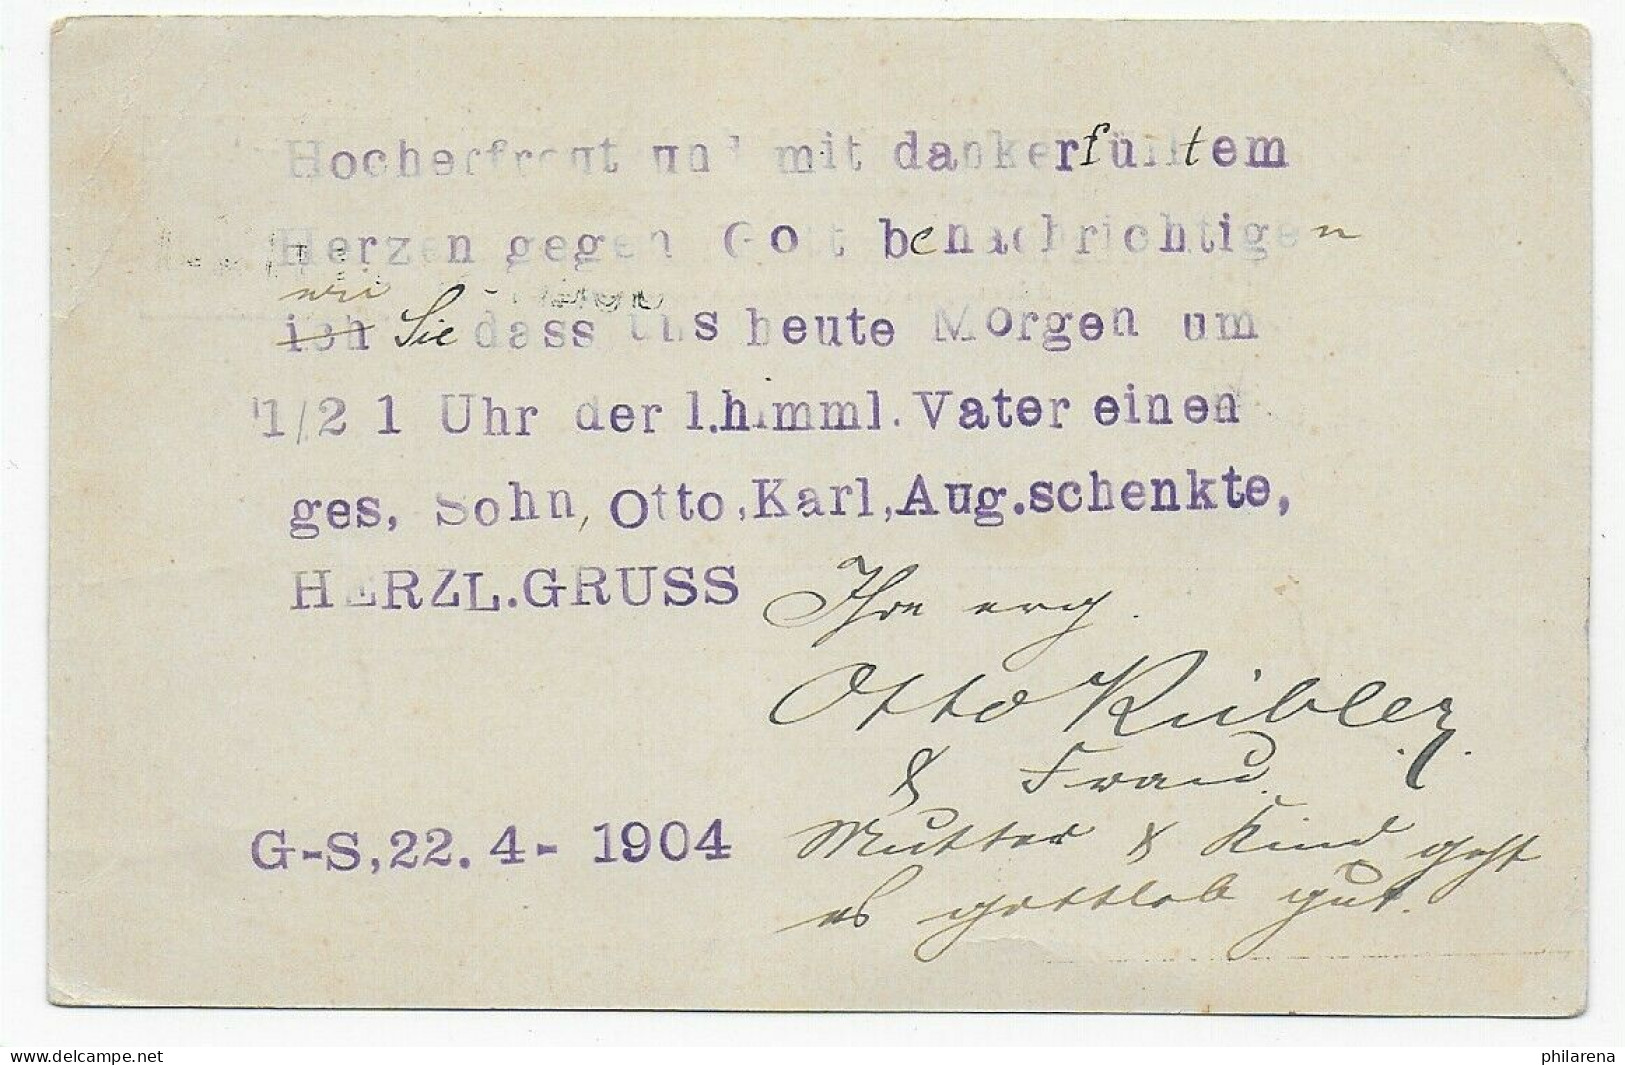 Nederlandsch-Indie: Penang 1904, Goenong-Sitoli, Nias Nach Tübingen - Indonesien